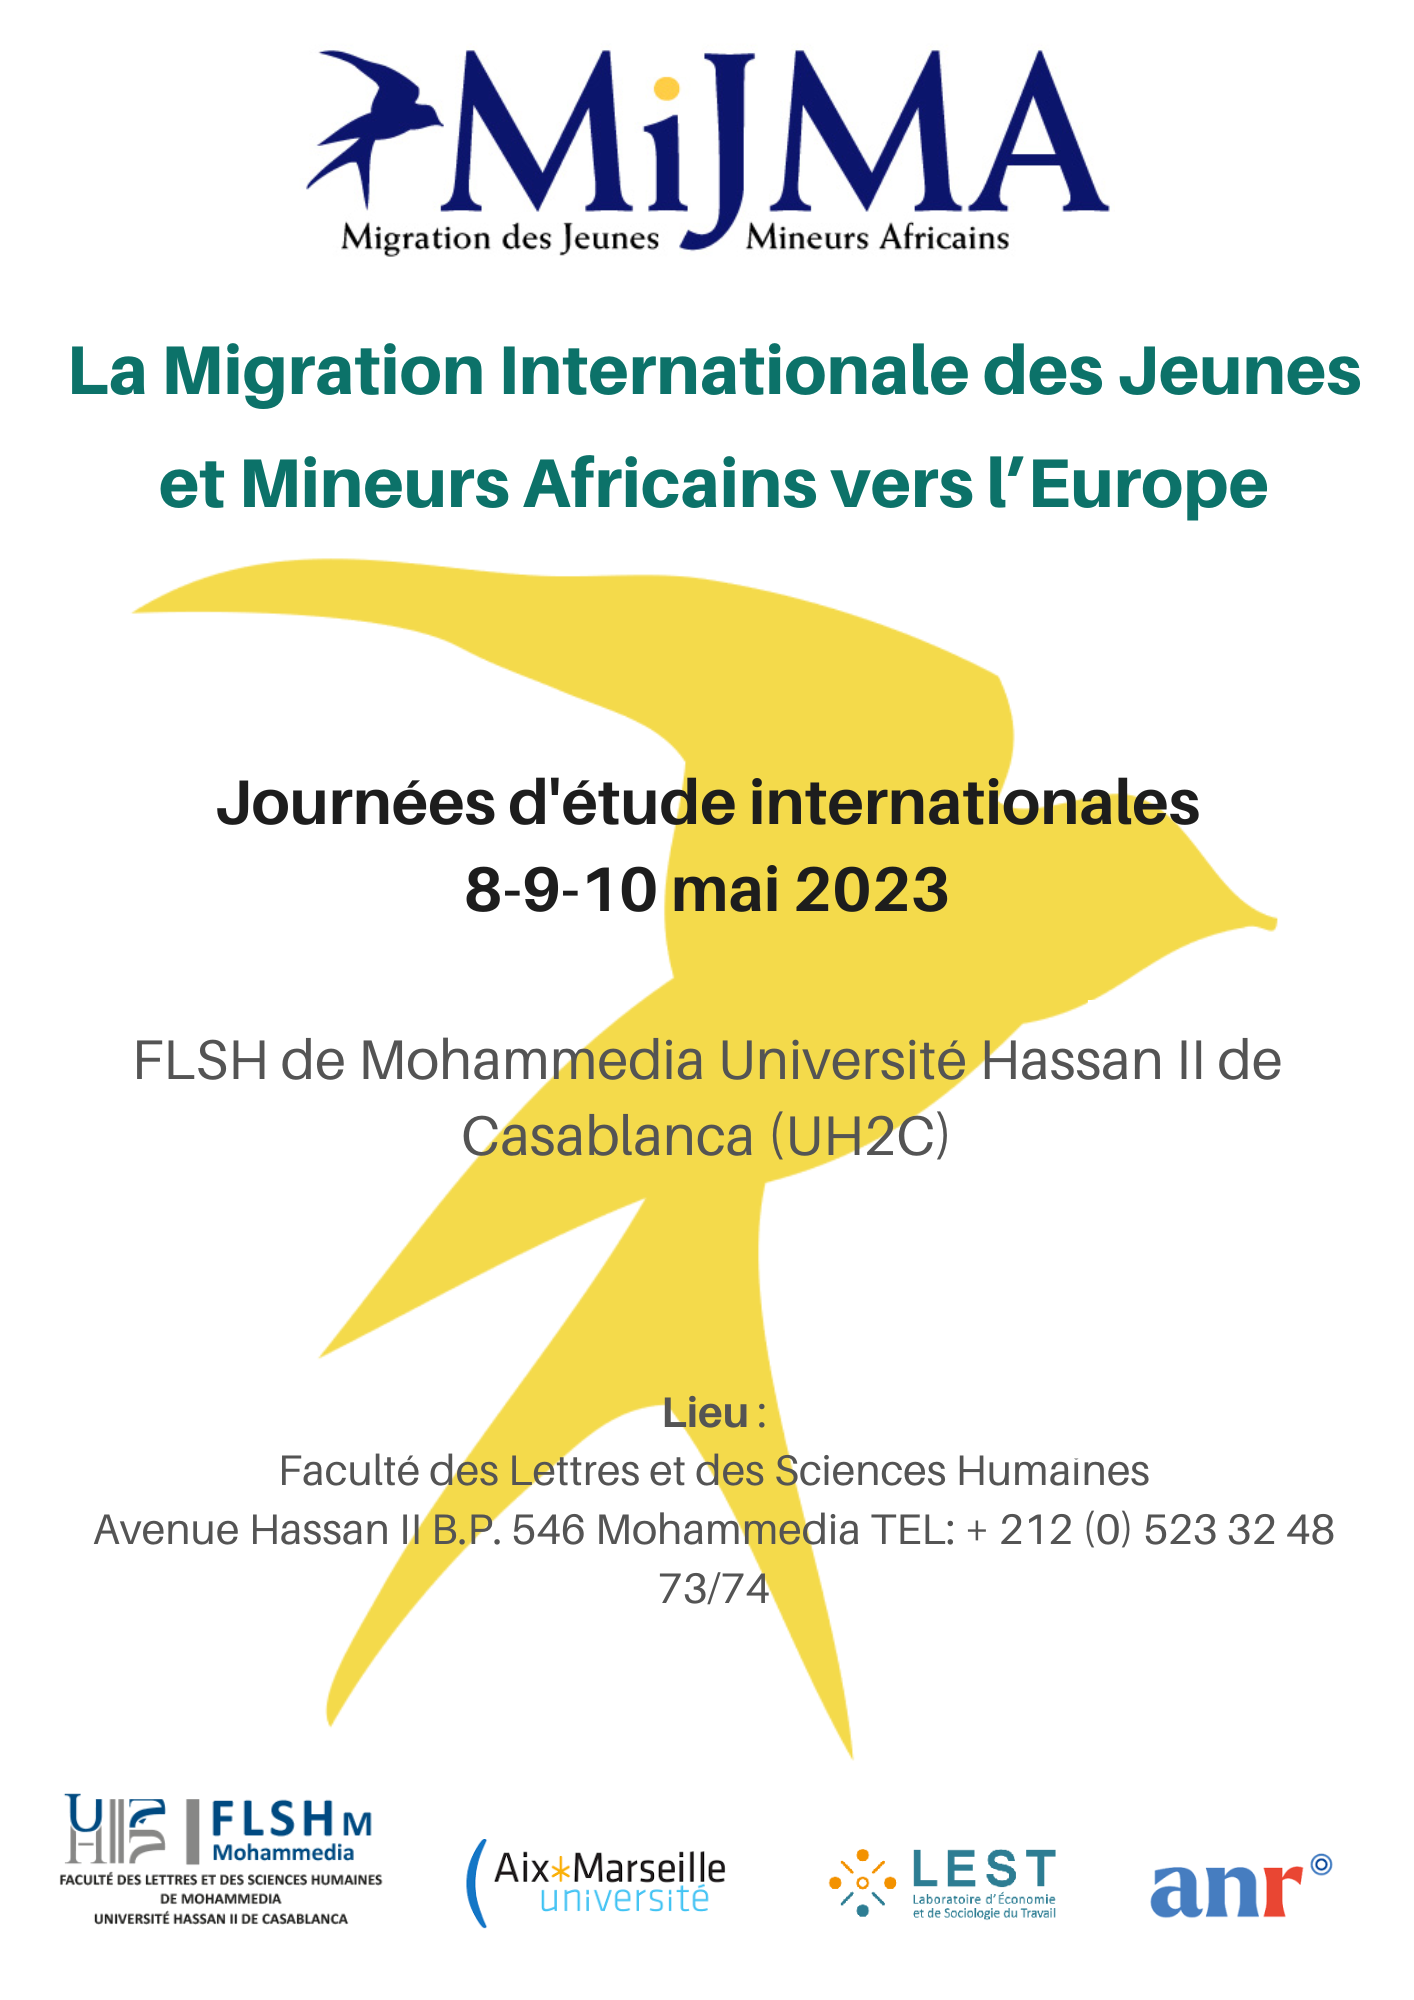 Journées d'étude internationales MIJMA 2023 au Maroc